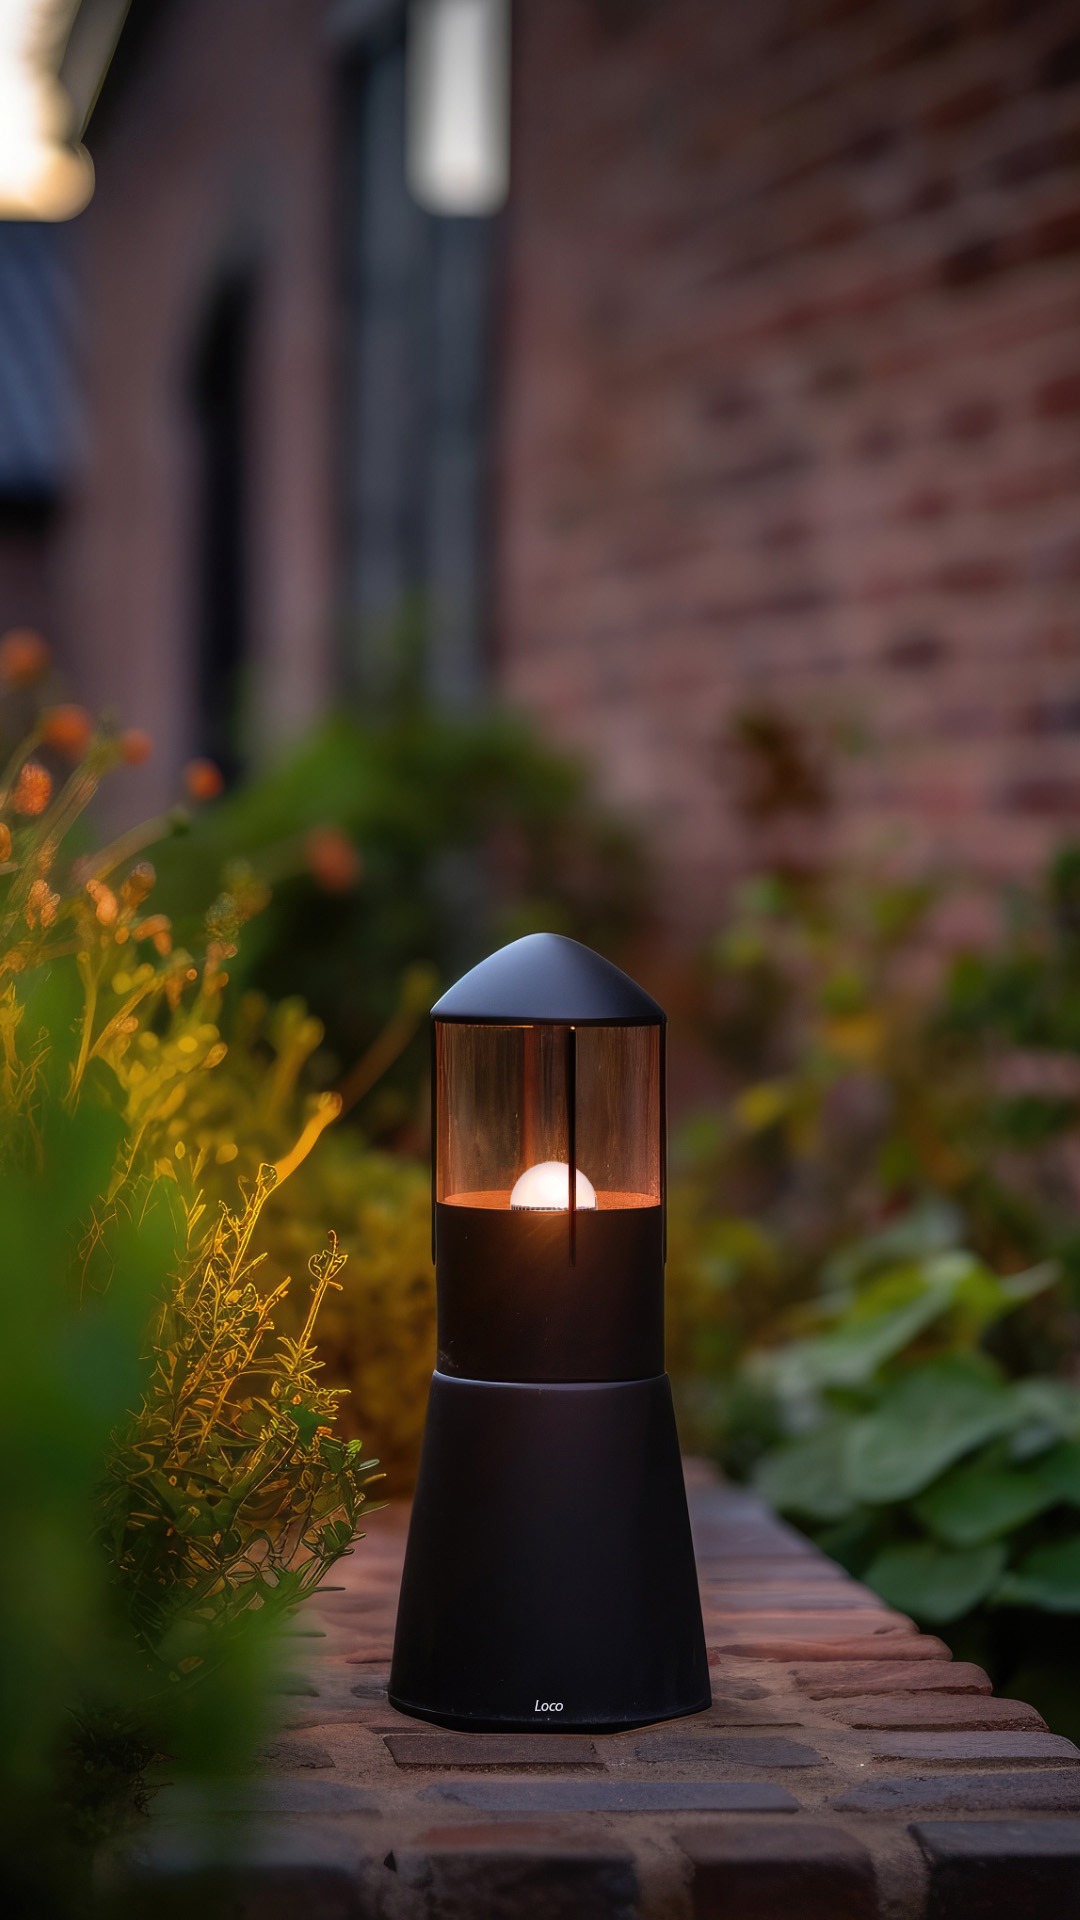 Portfolio image about garden lantern